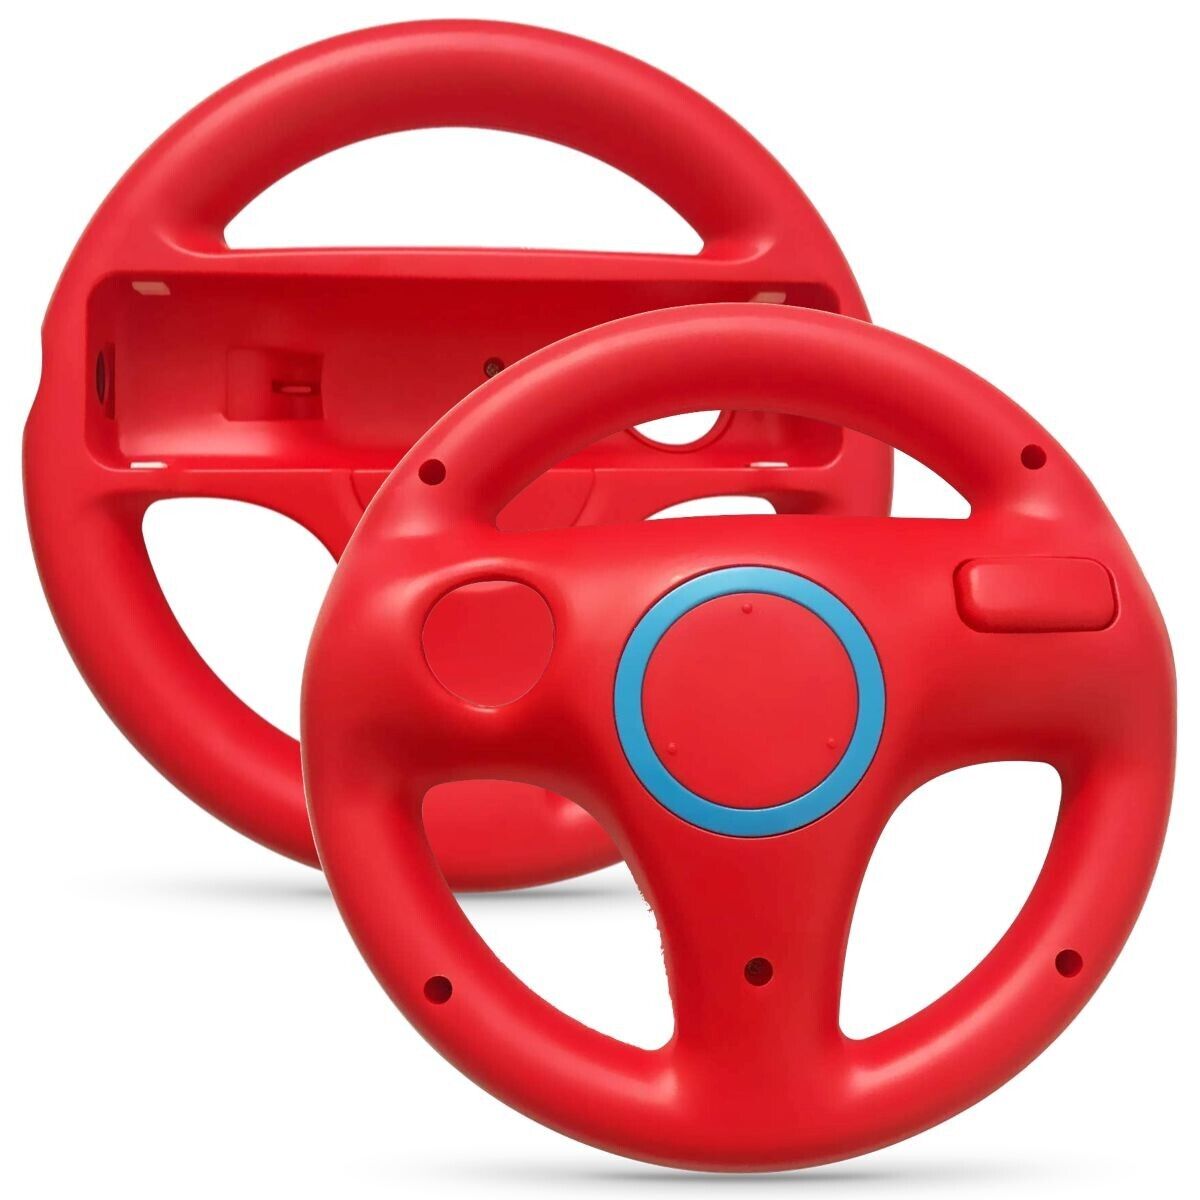 Lenkrad / Wheel in versch. Farben